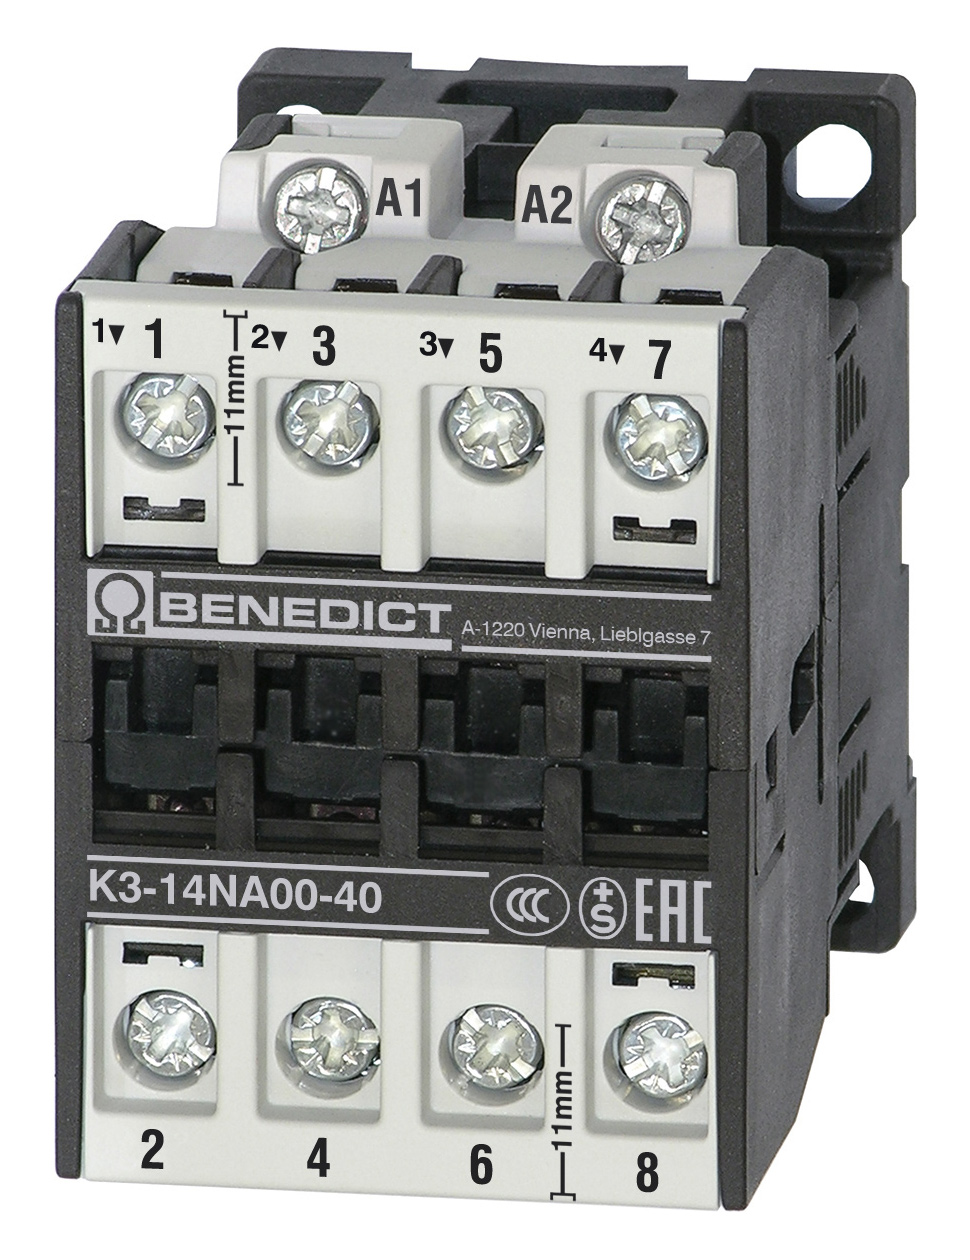  K3-14NA00-40 400 BENEDICT